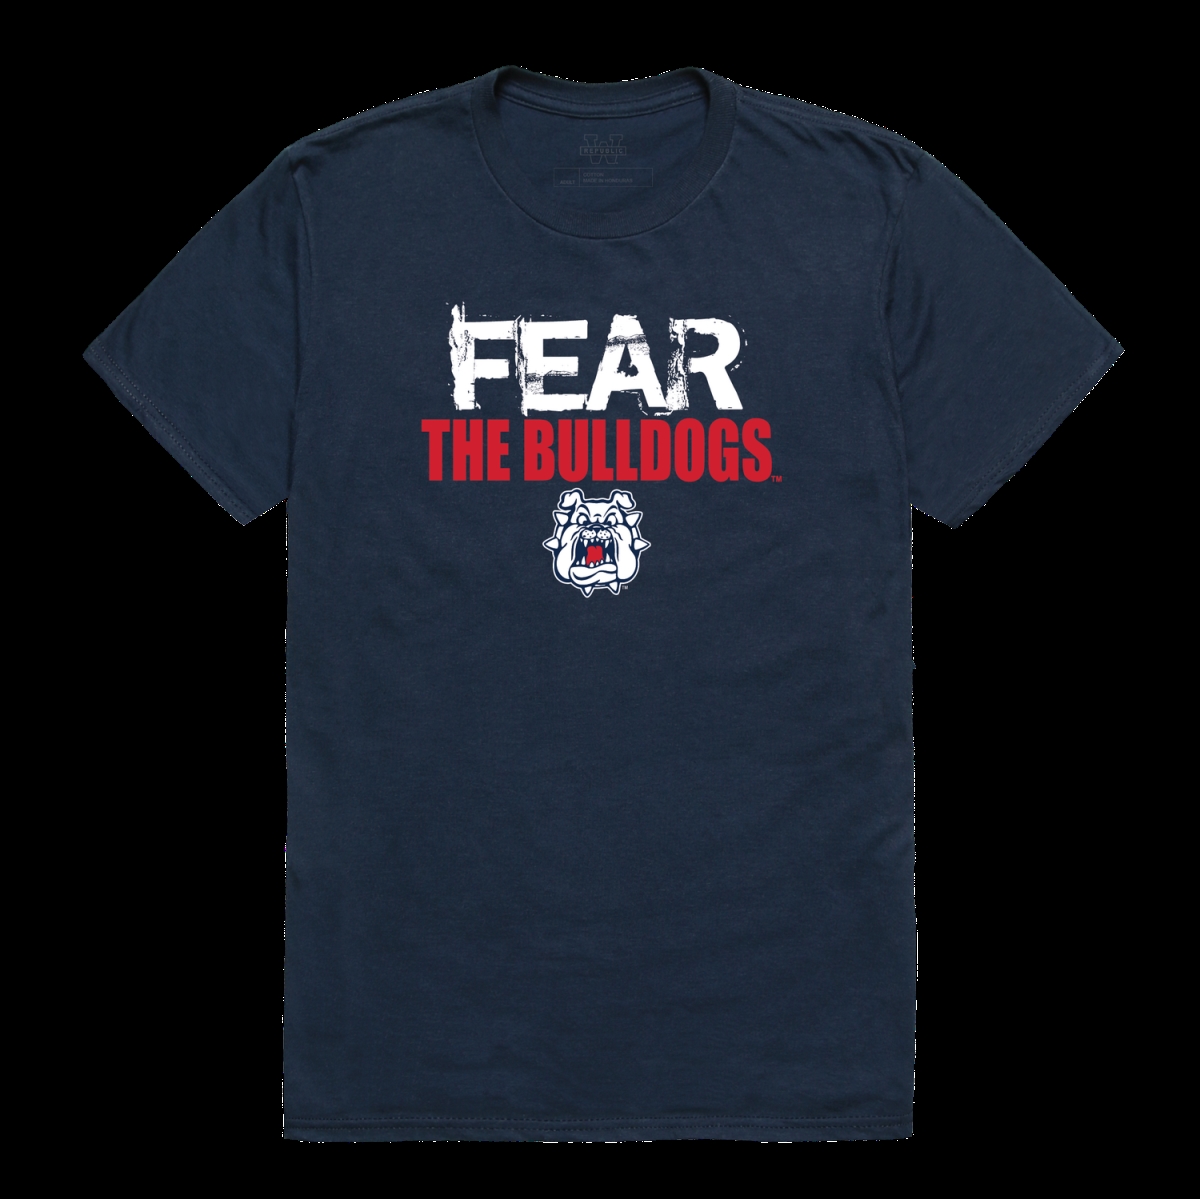 518-169-NV2-02 California State University, Fresno Bulldogs Fear College T-Shirt, Navy - Medium -  W Republic